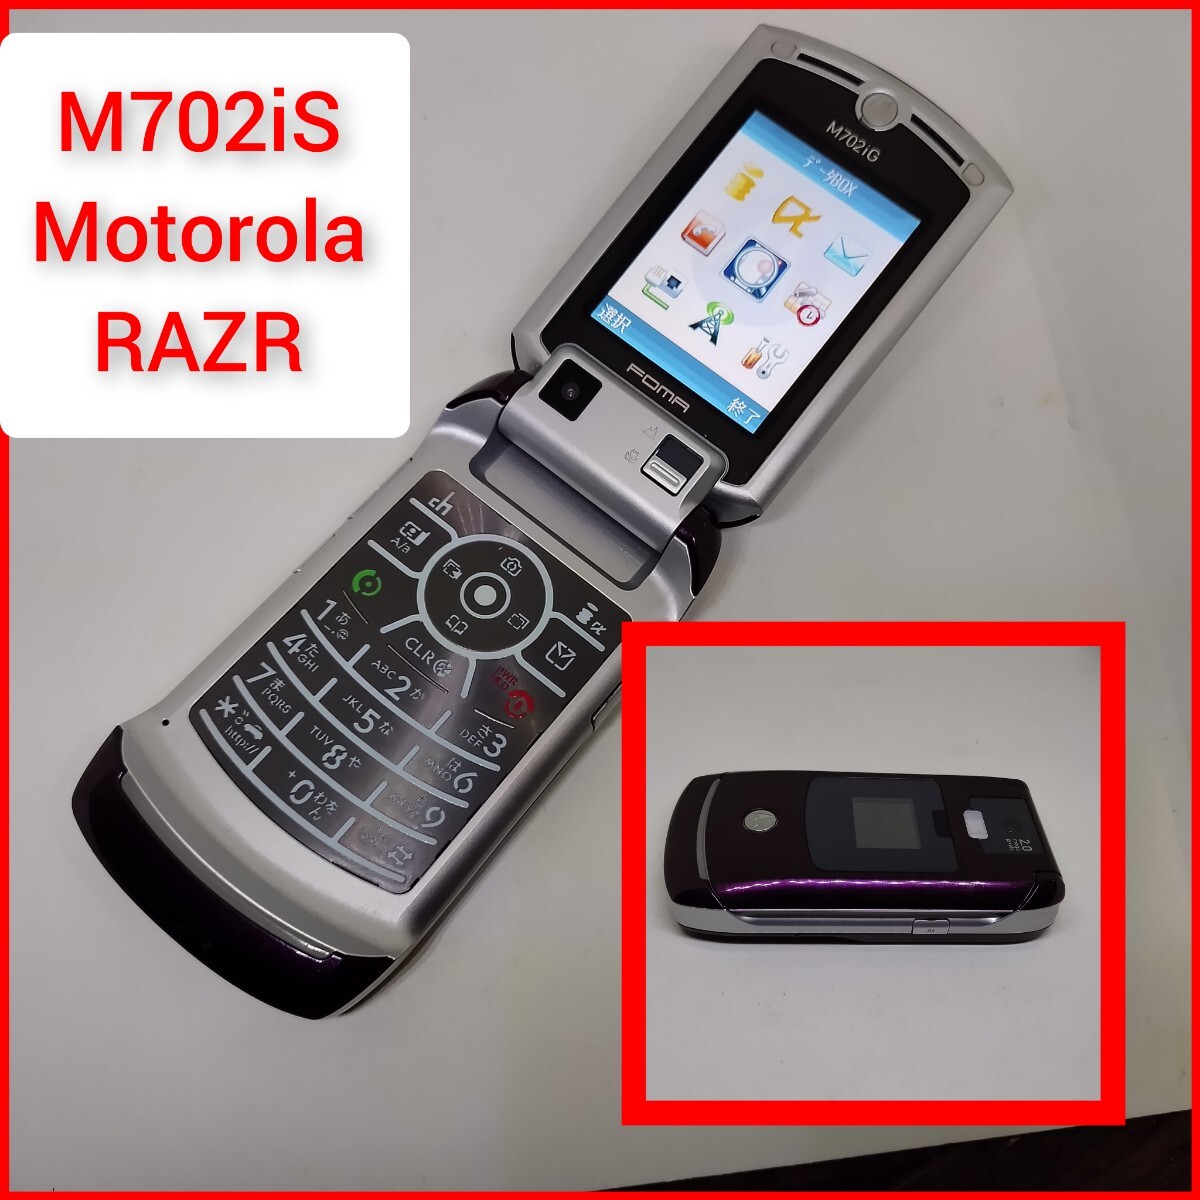 FOMA M702iS ガラケー Motorola RAZR モトローラー レーザー imode i-mode 海外携帯電話 ドコモ docomo モトレーザー_画像1